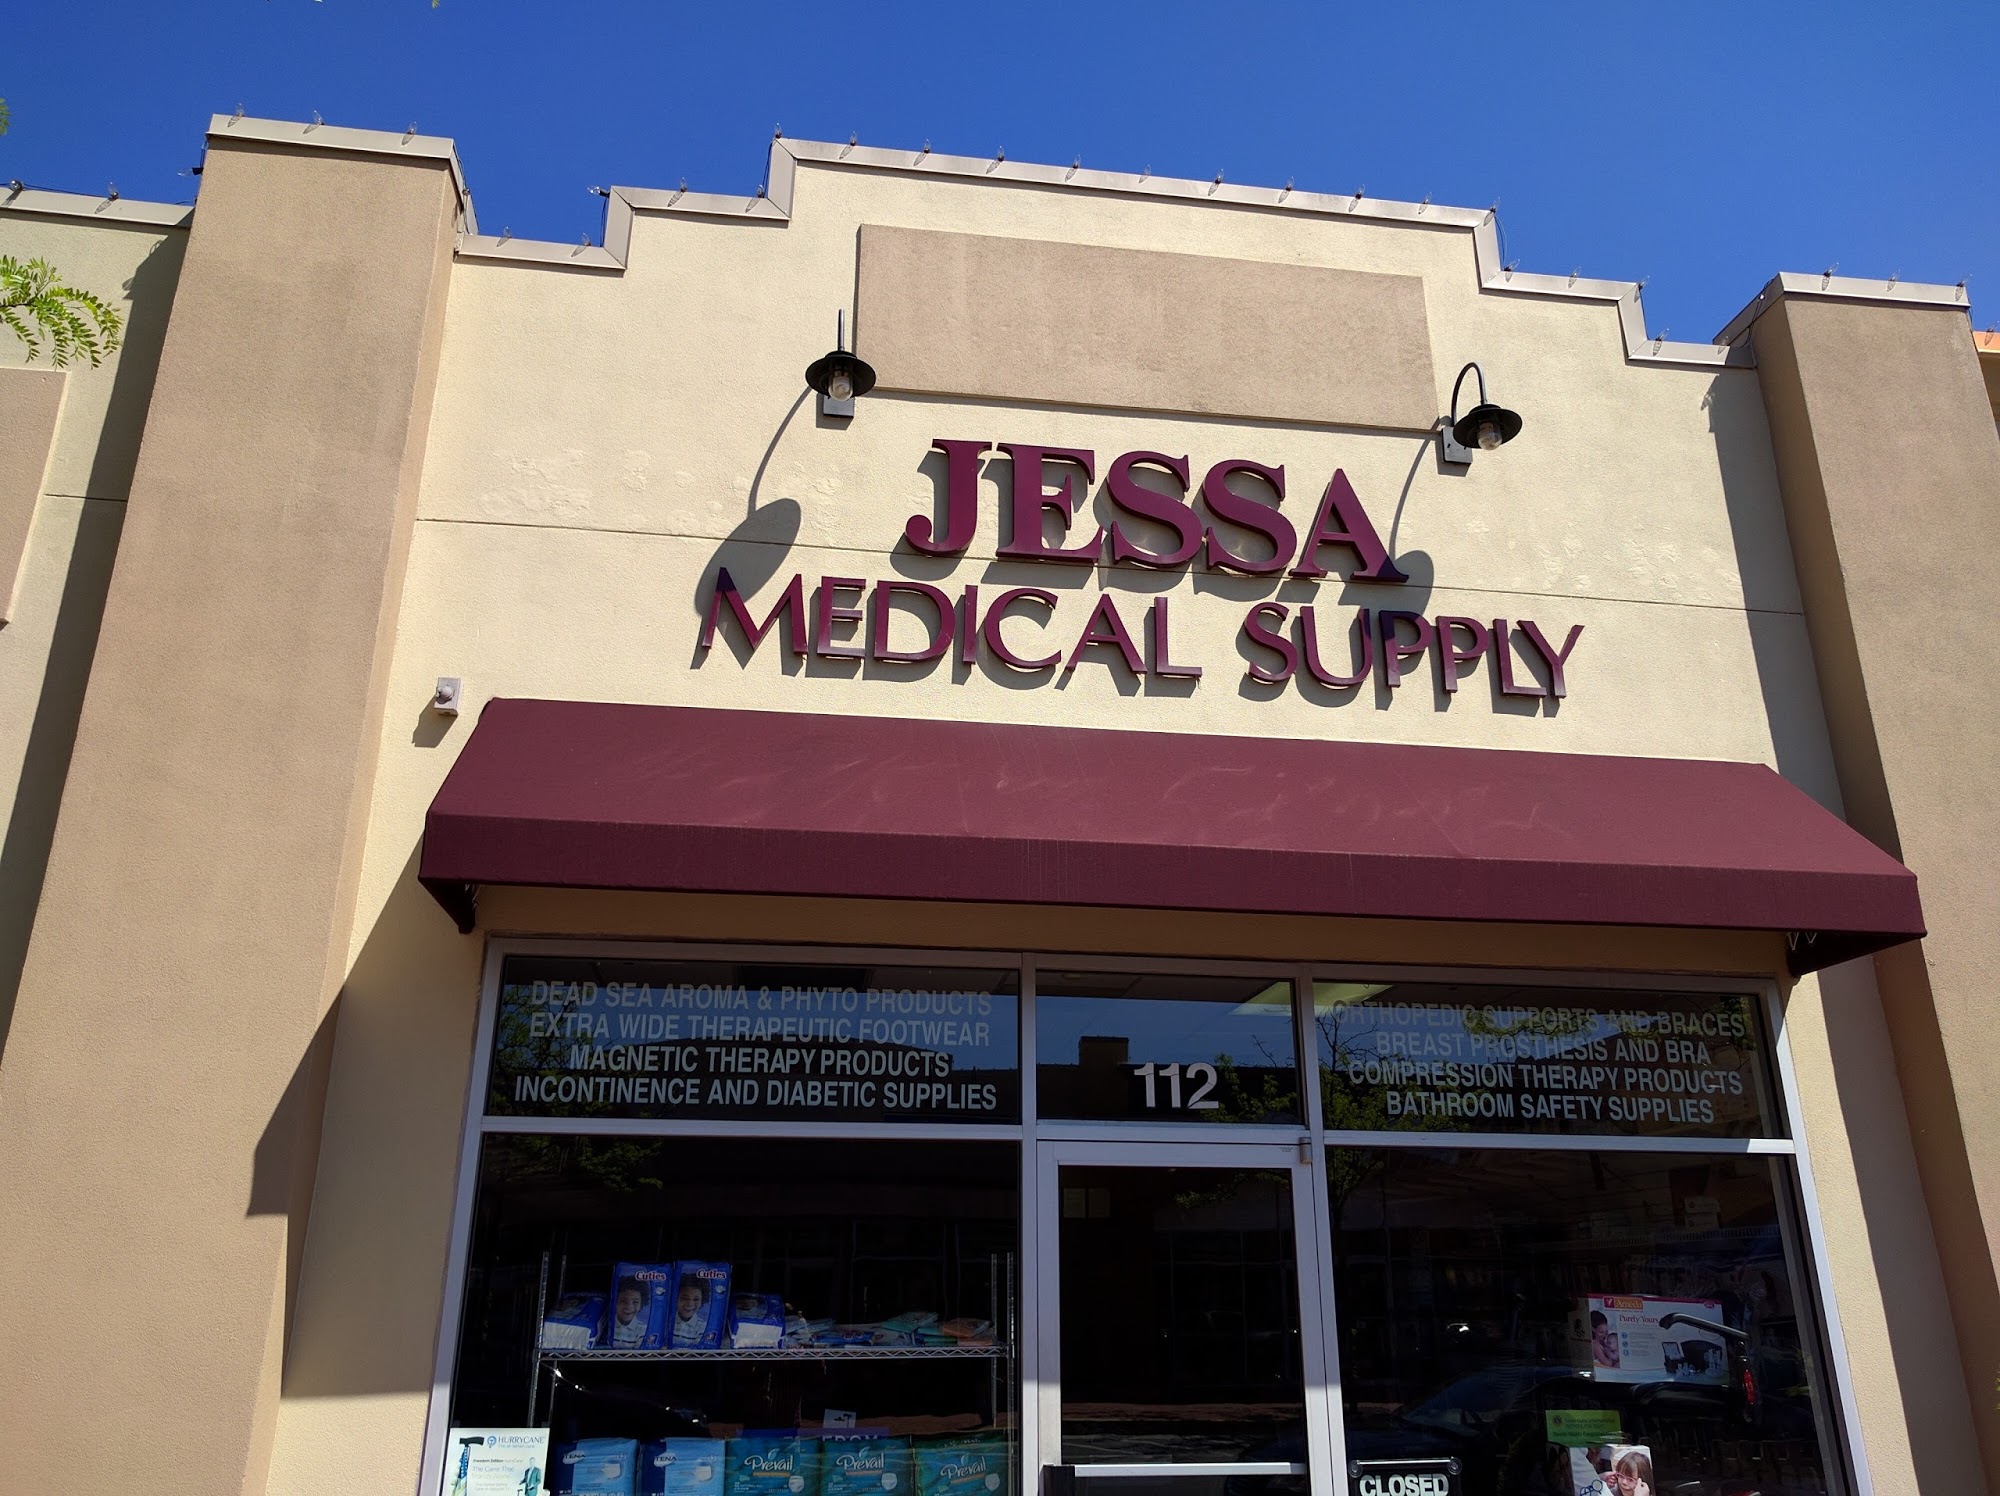 Jessa Medical